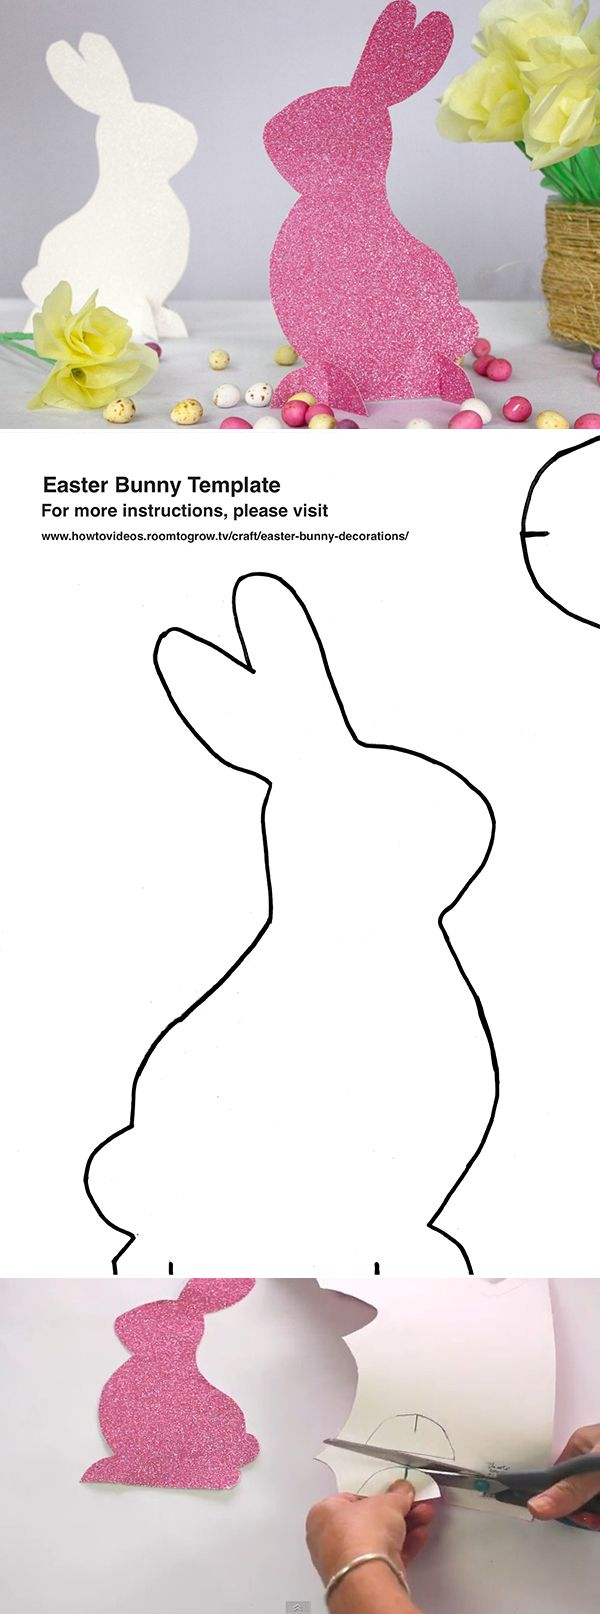 Épinglé Par Lydie Colomban Sur Easter | Pinterest | Easter, Easter - Free Printable Bunny Templates